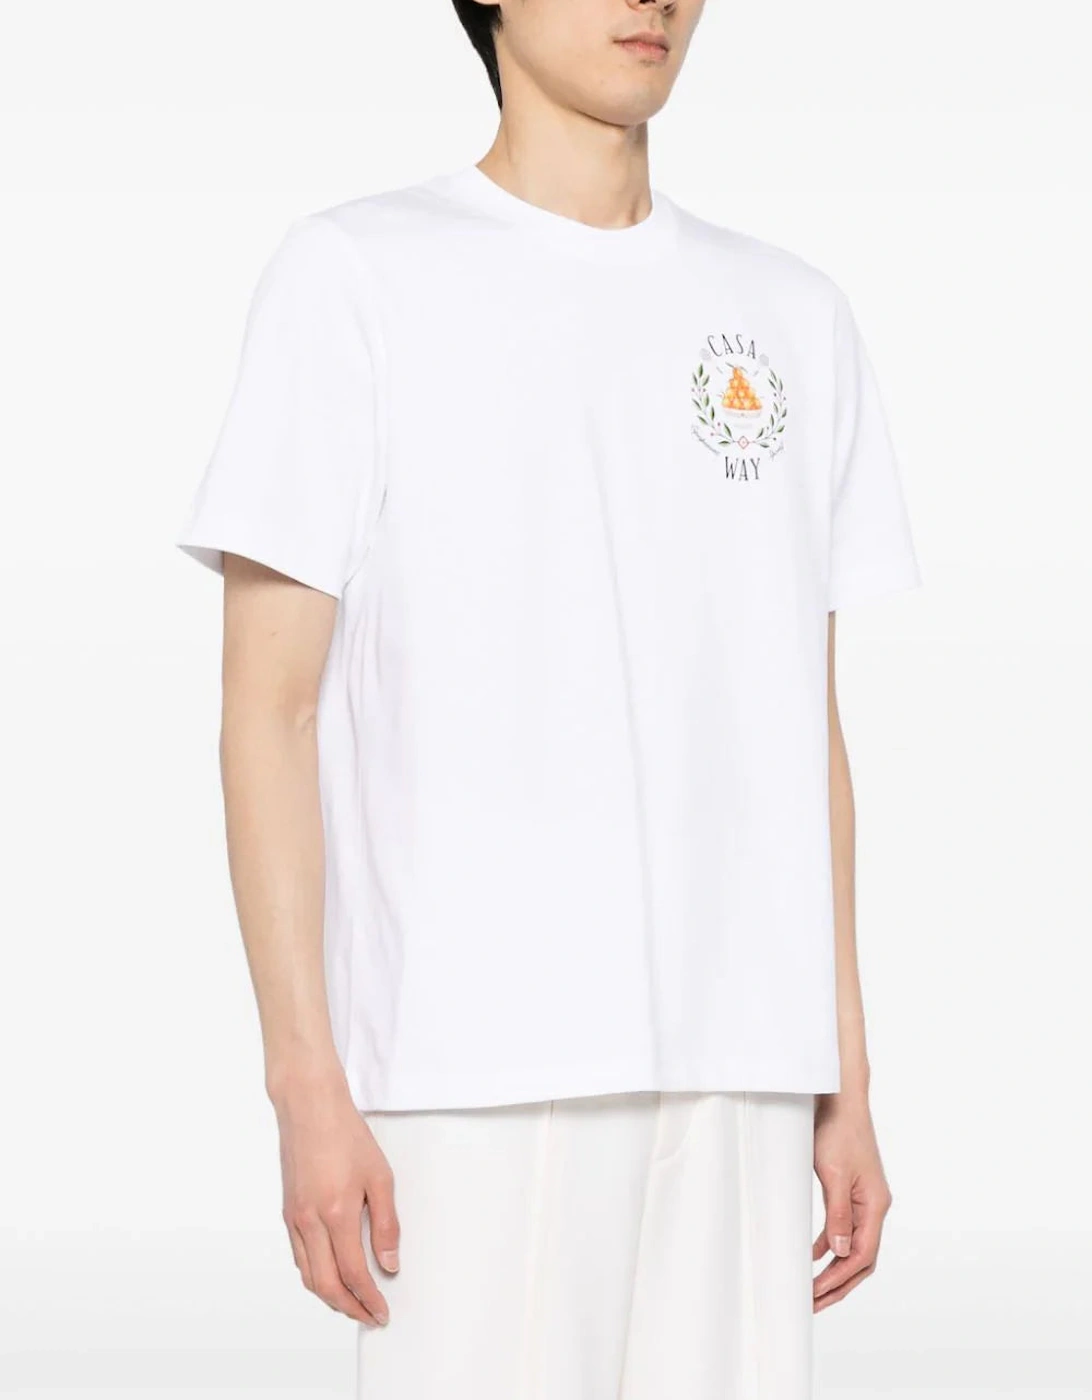 Casa Way Bowl of Oranges T-Shirt in White